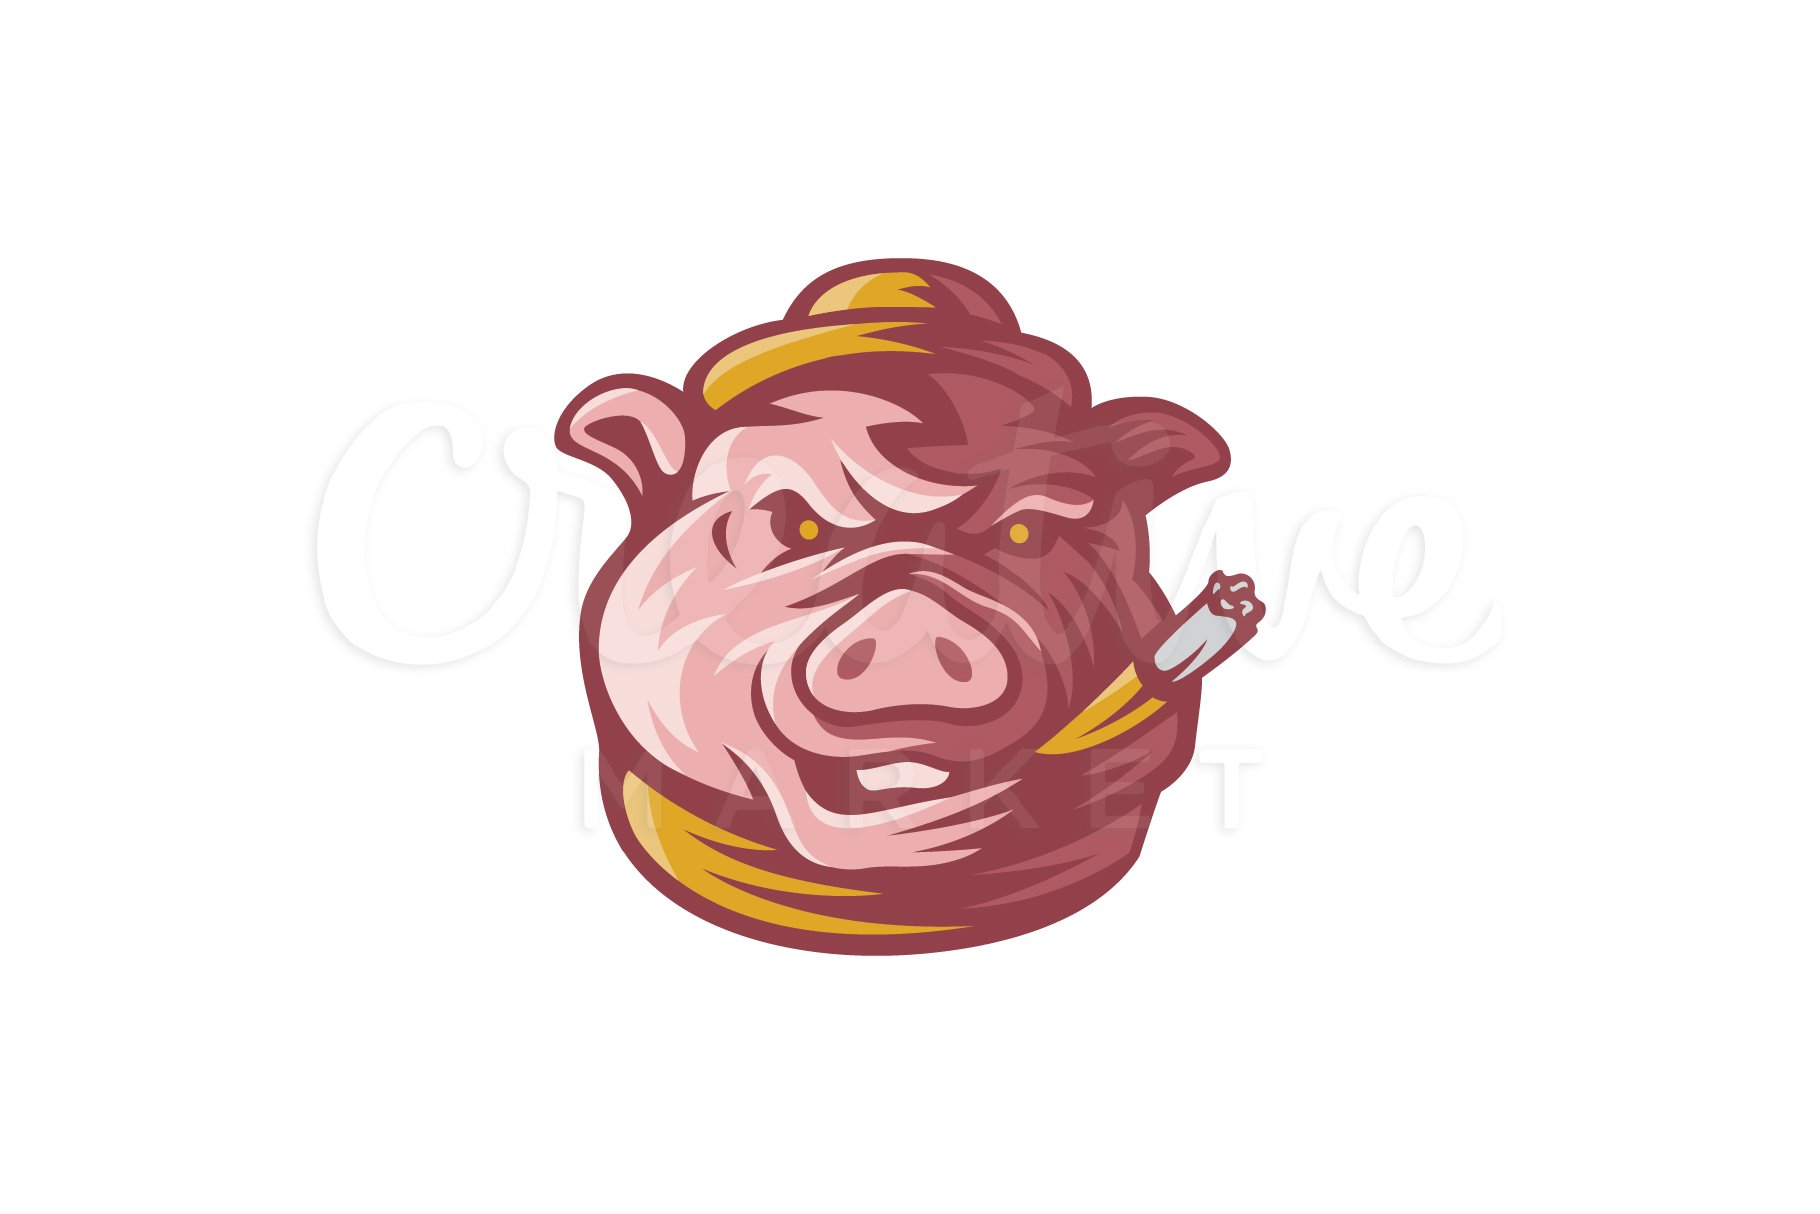 Pig Gangster Mascot Logo cover image.